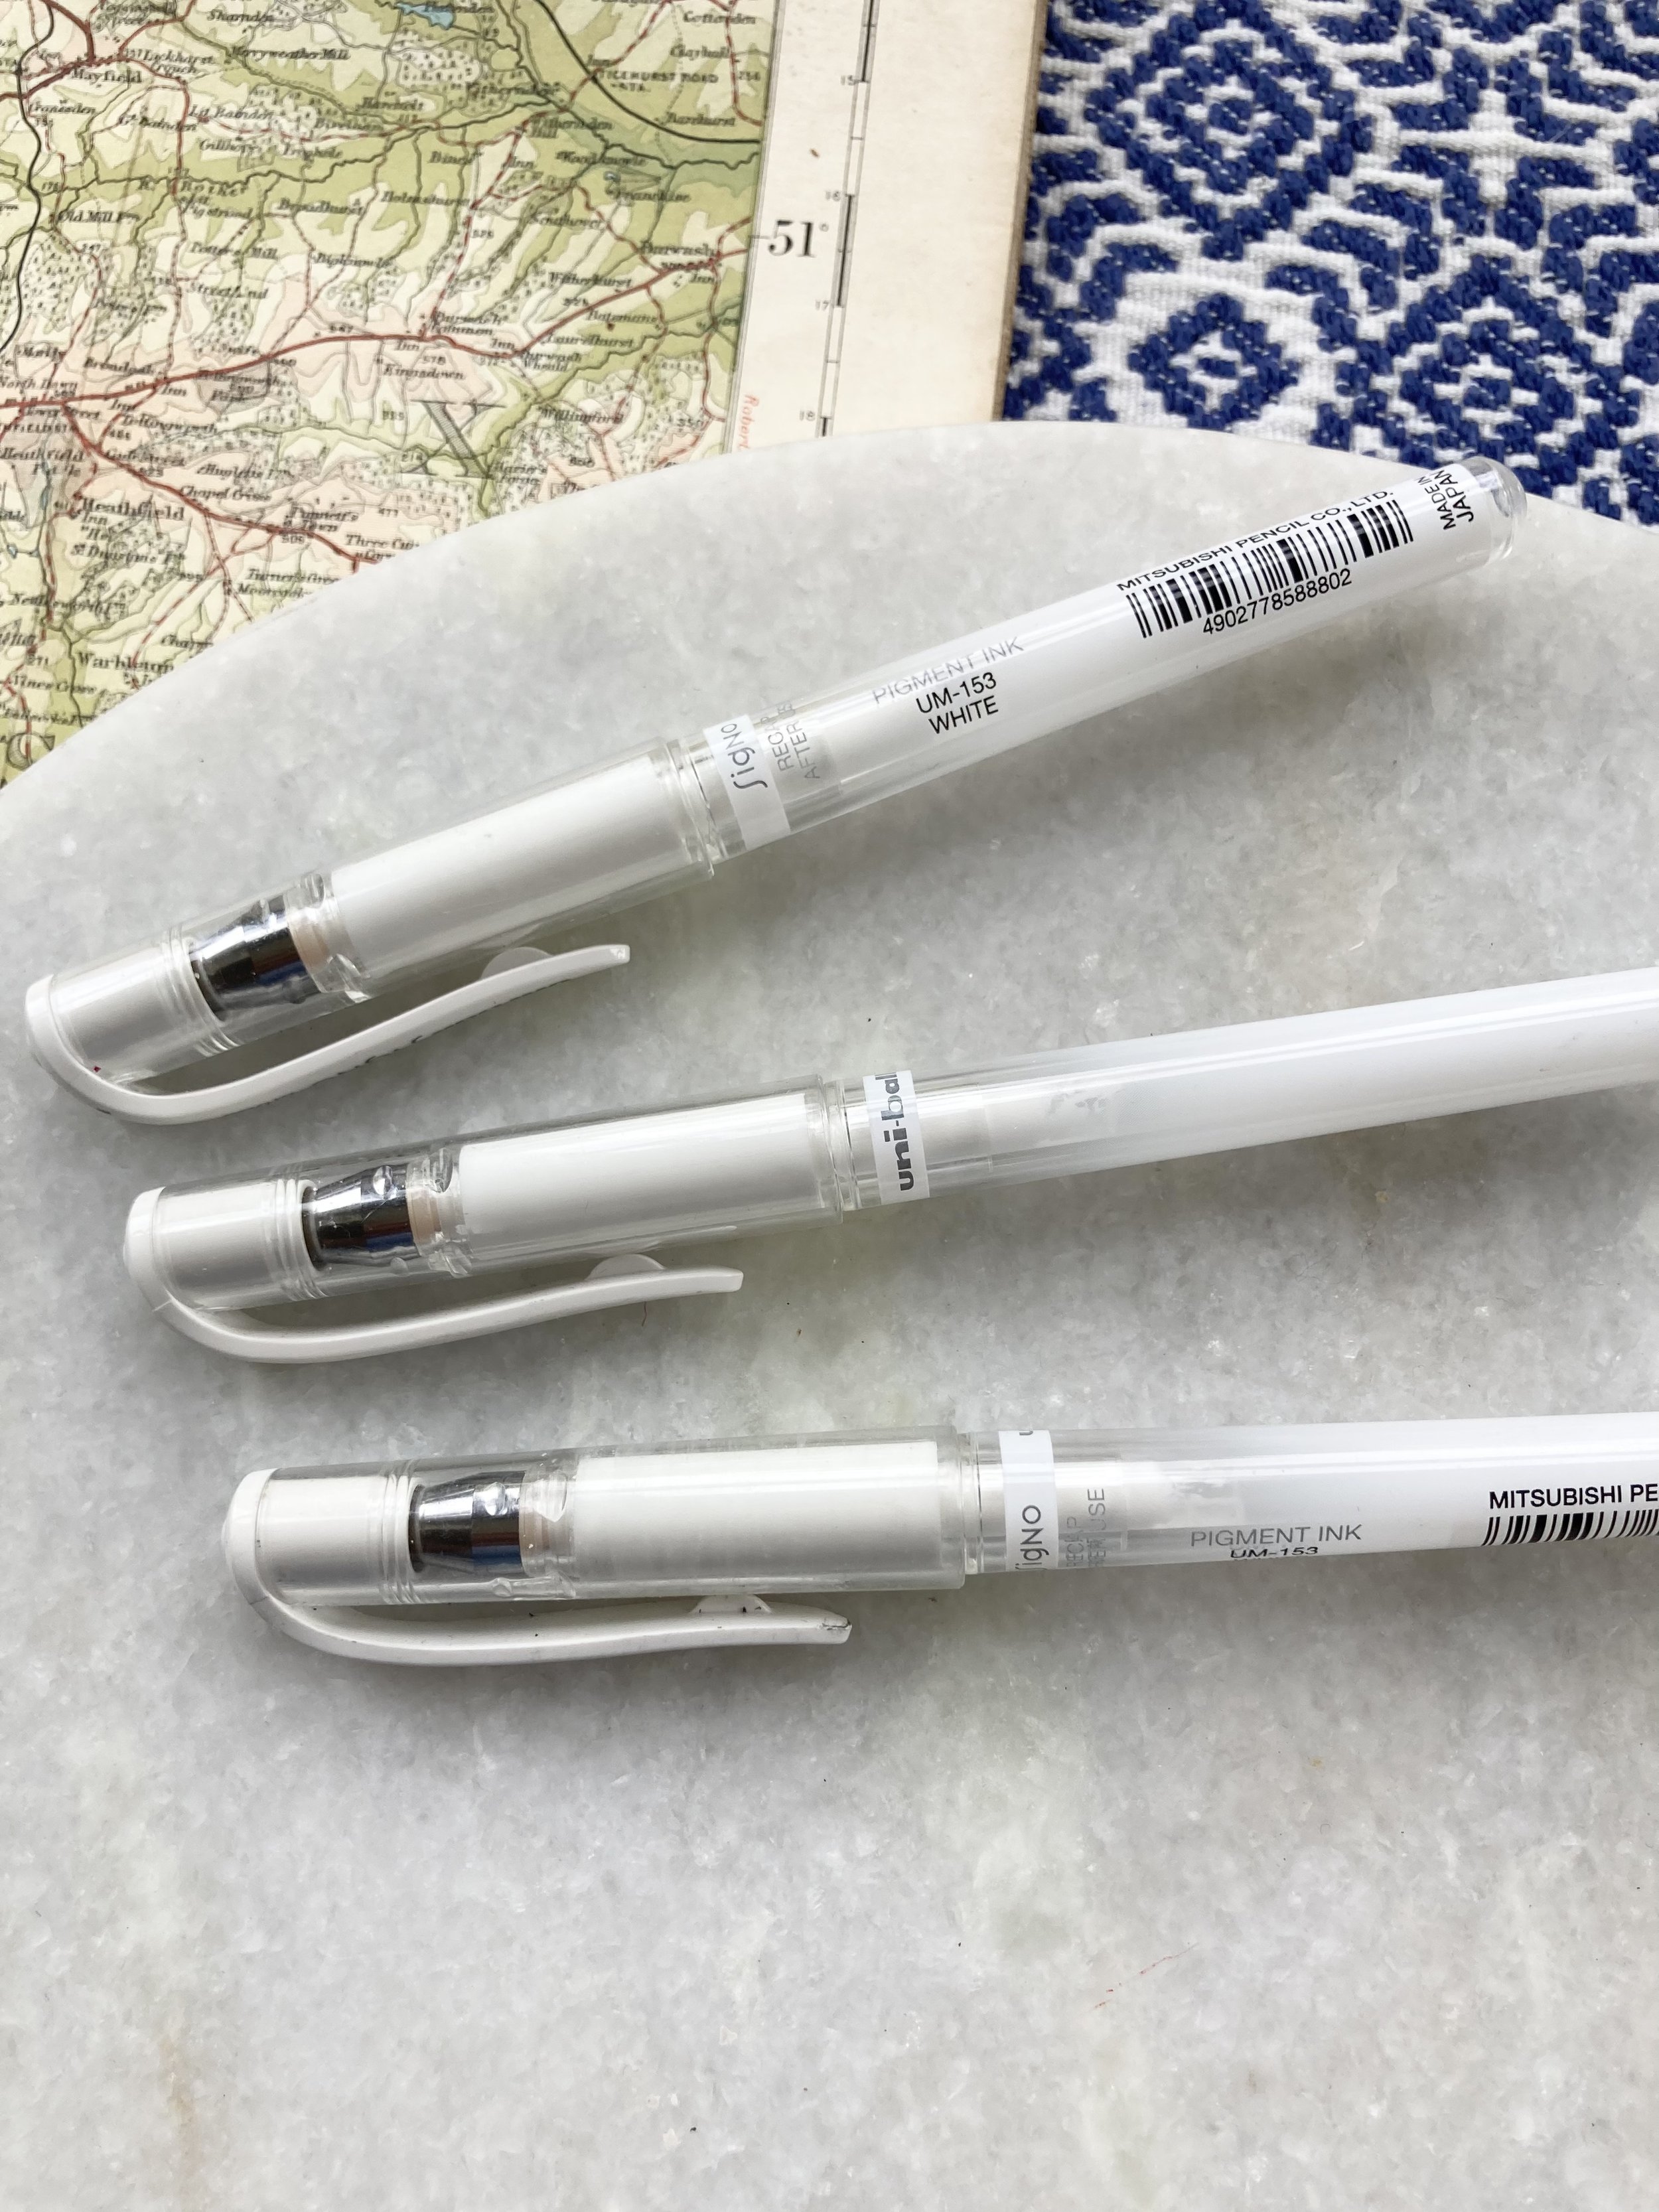 UniBall White Gel Pen by Chris Haughey 